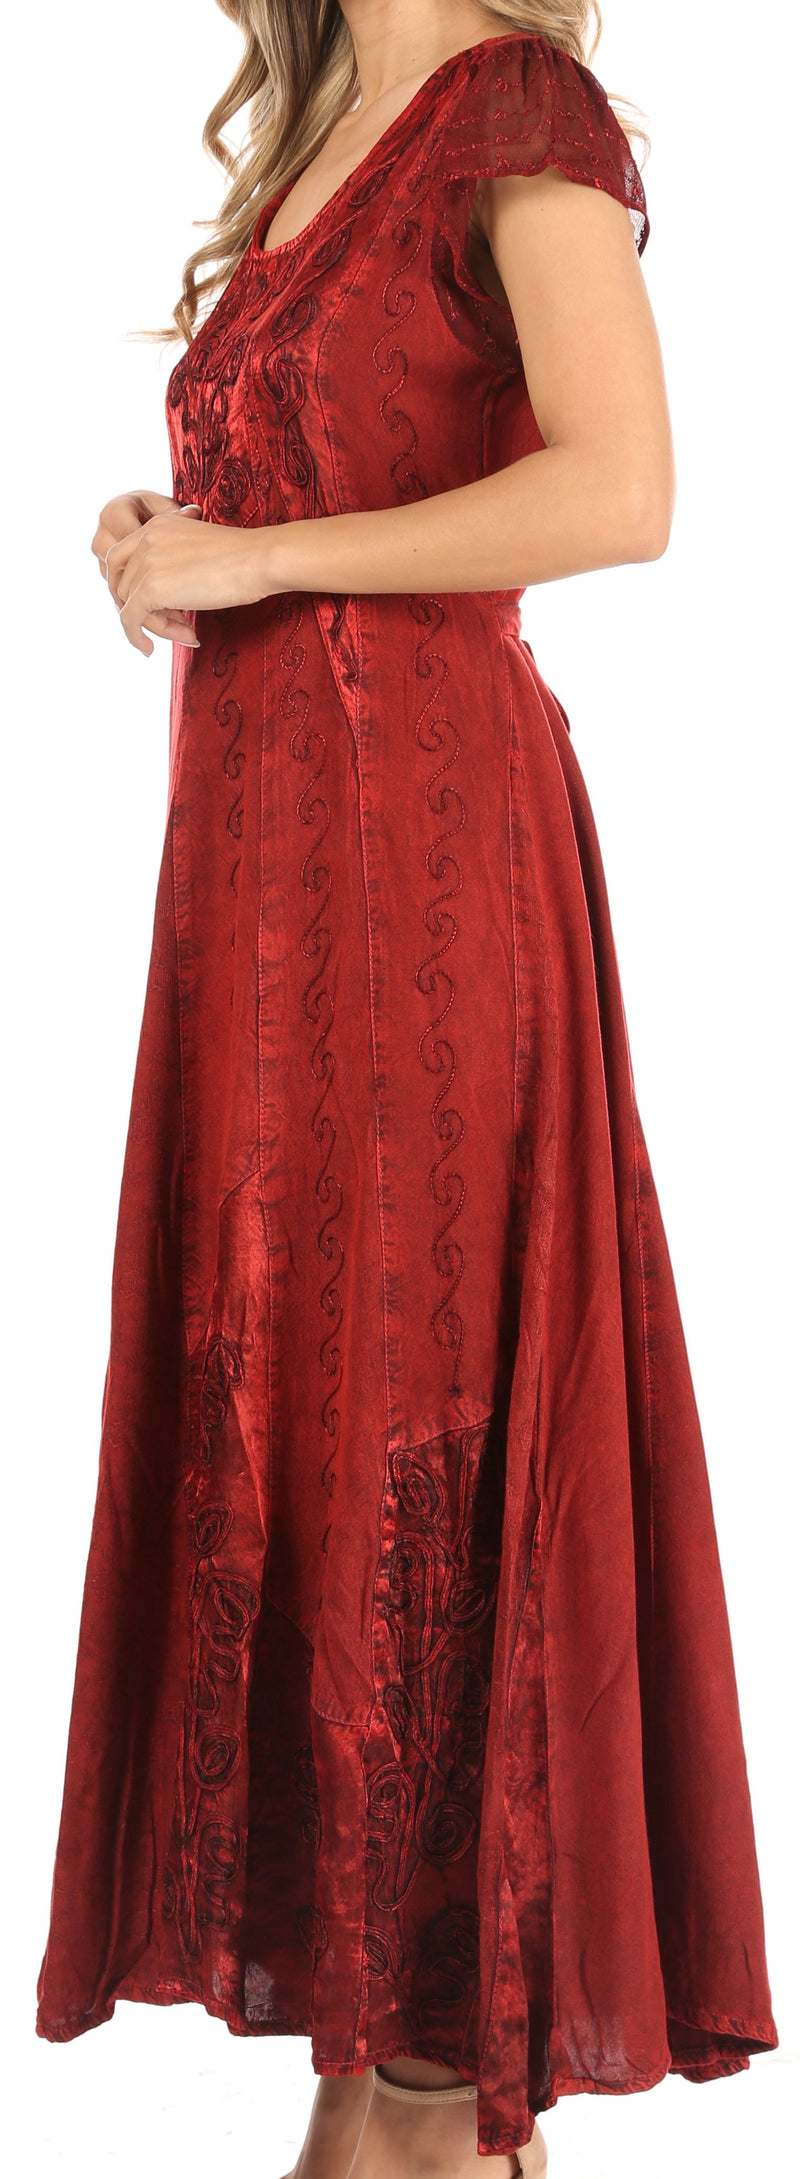 Sakkas Marni Women's Casual Maxi Short Sleeve Stonewashed Long Caftan Dress Lace